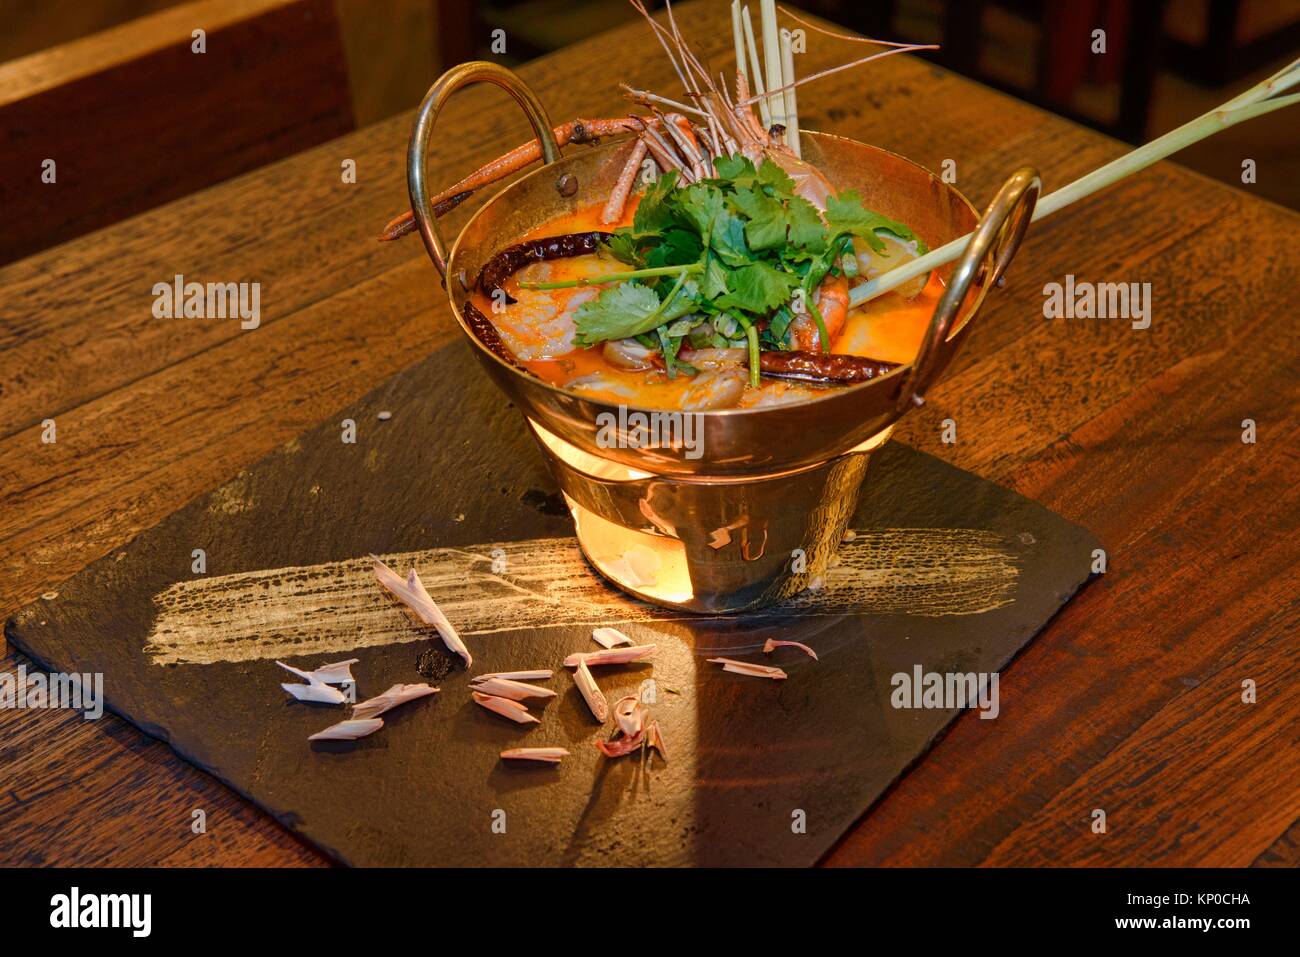 Tom yum goong spicy Thai cuisine, Bangkok, Thailand. Stock Photo